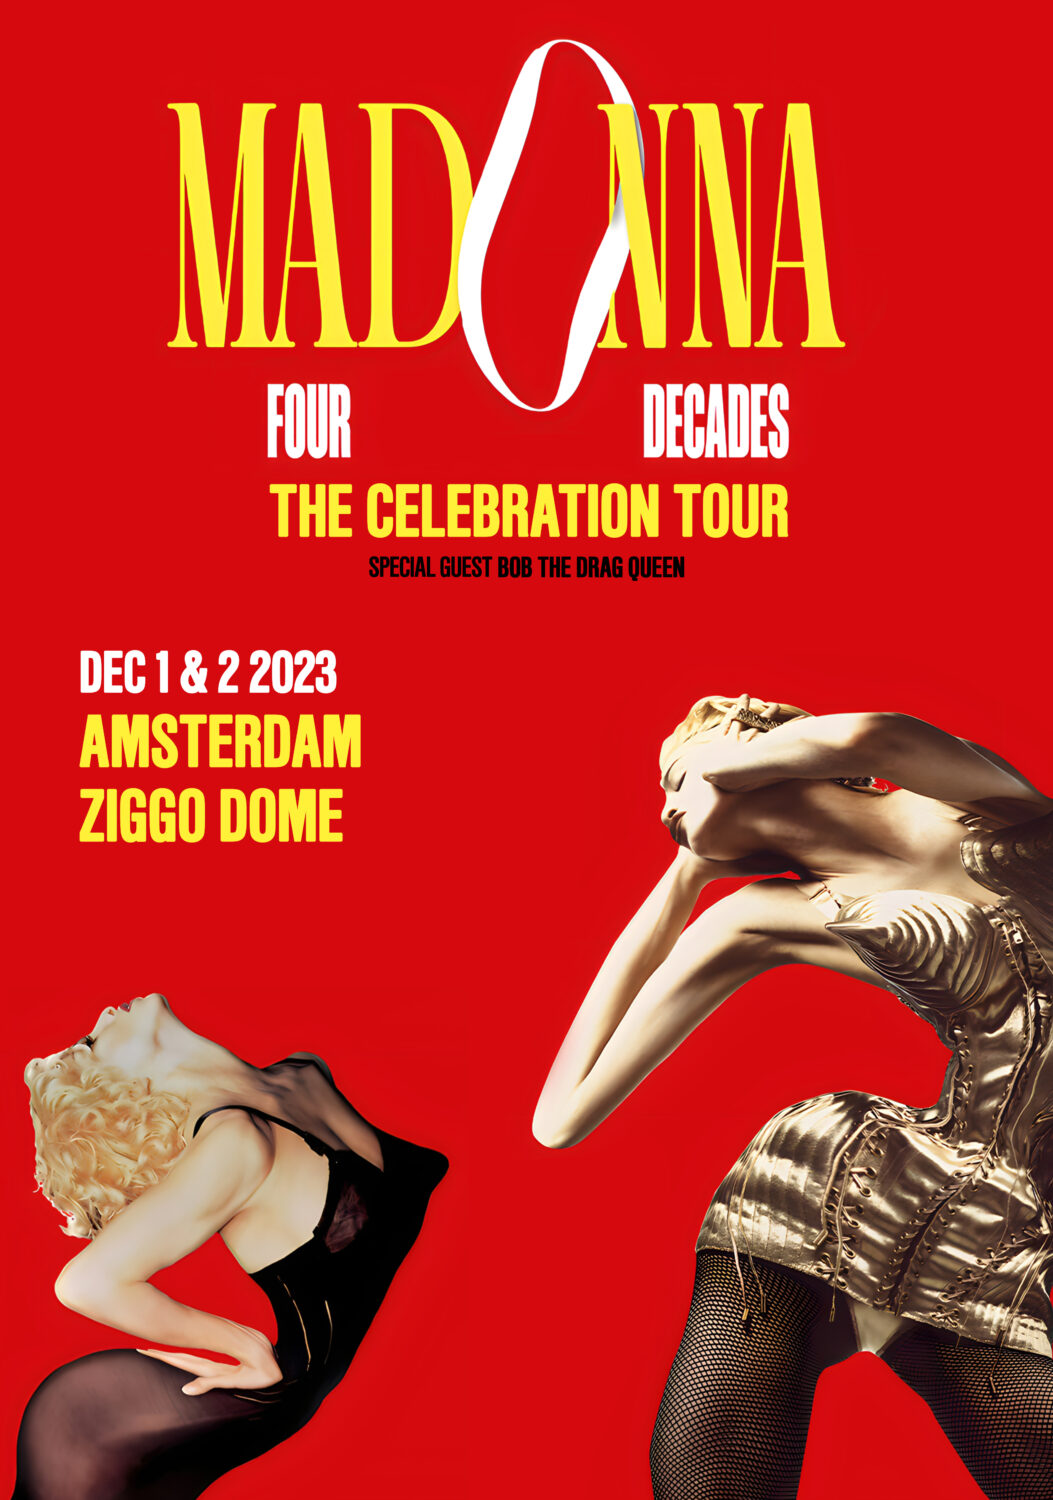 the celebration tour madonna dates